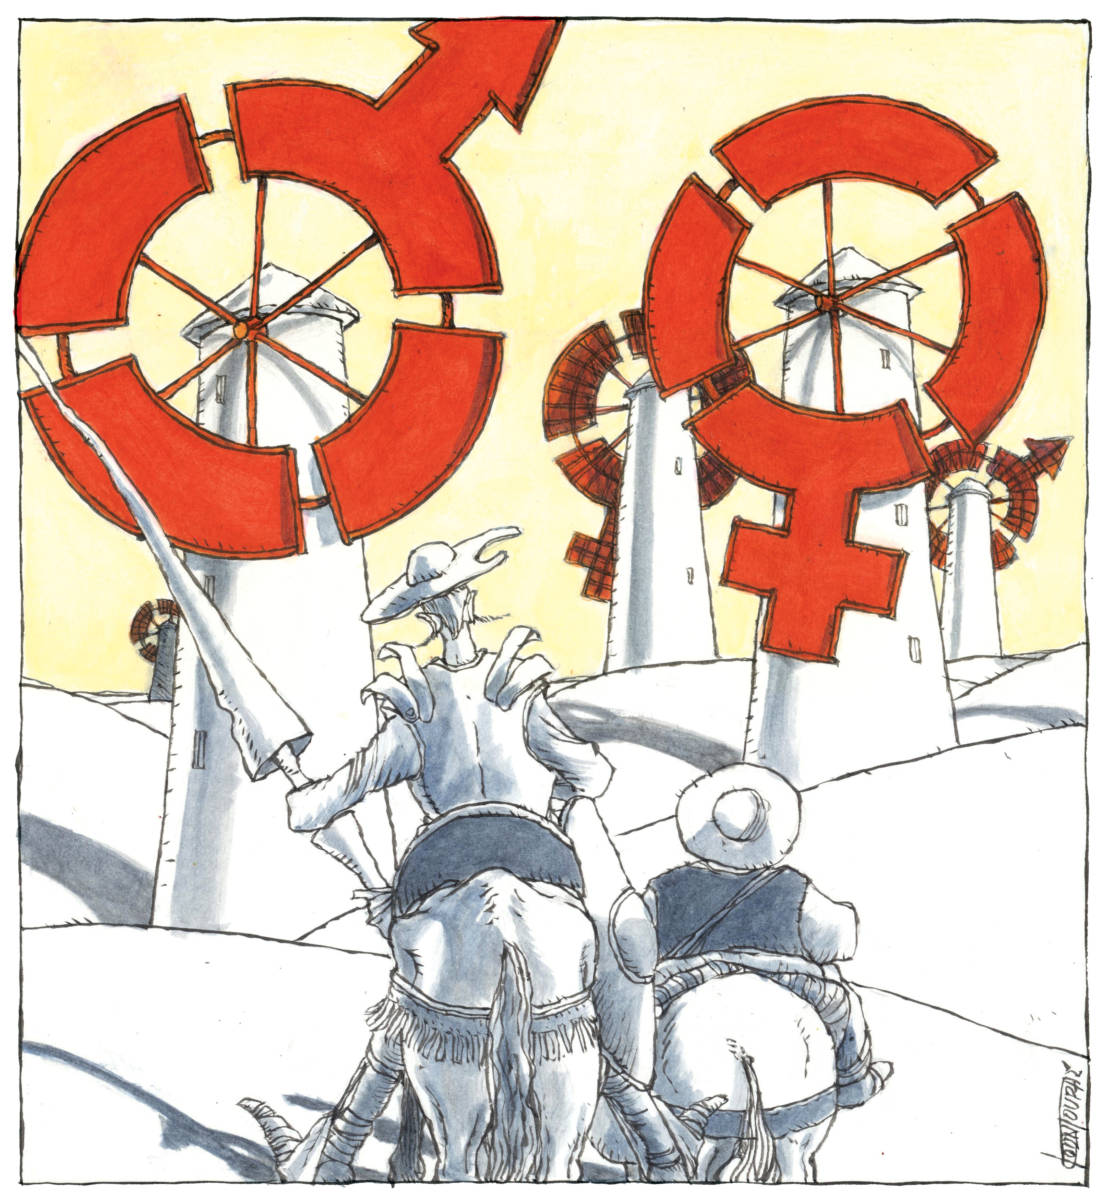 Gender Equality Quixote, Michael Kountouris, southern Utah, Utah, St. George, The Independent, Gender,Equality,men,women,Don Quixote,windmills,Spain